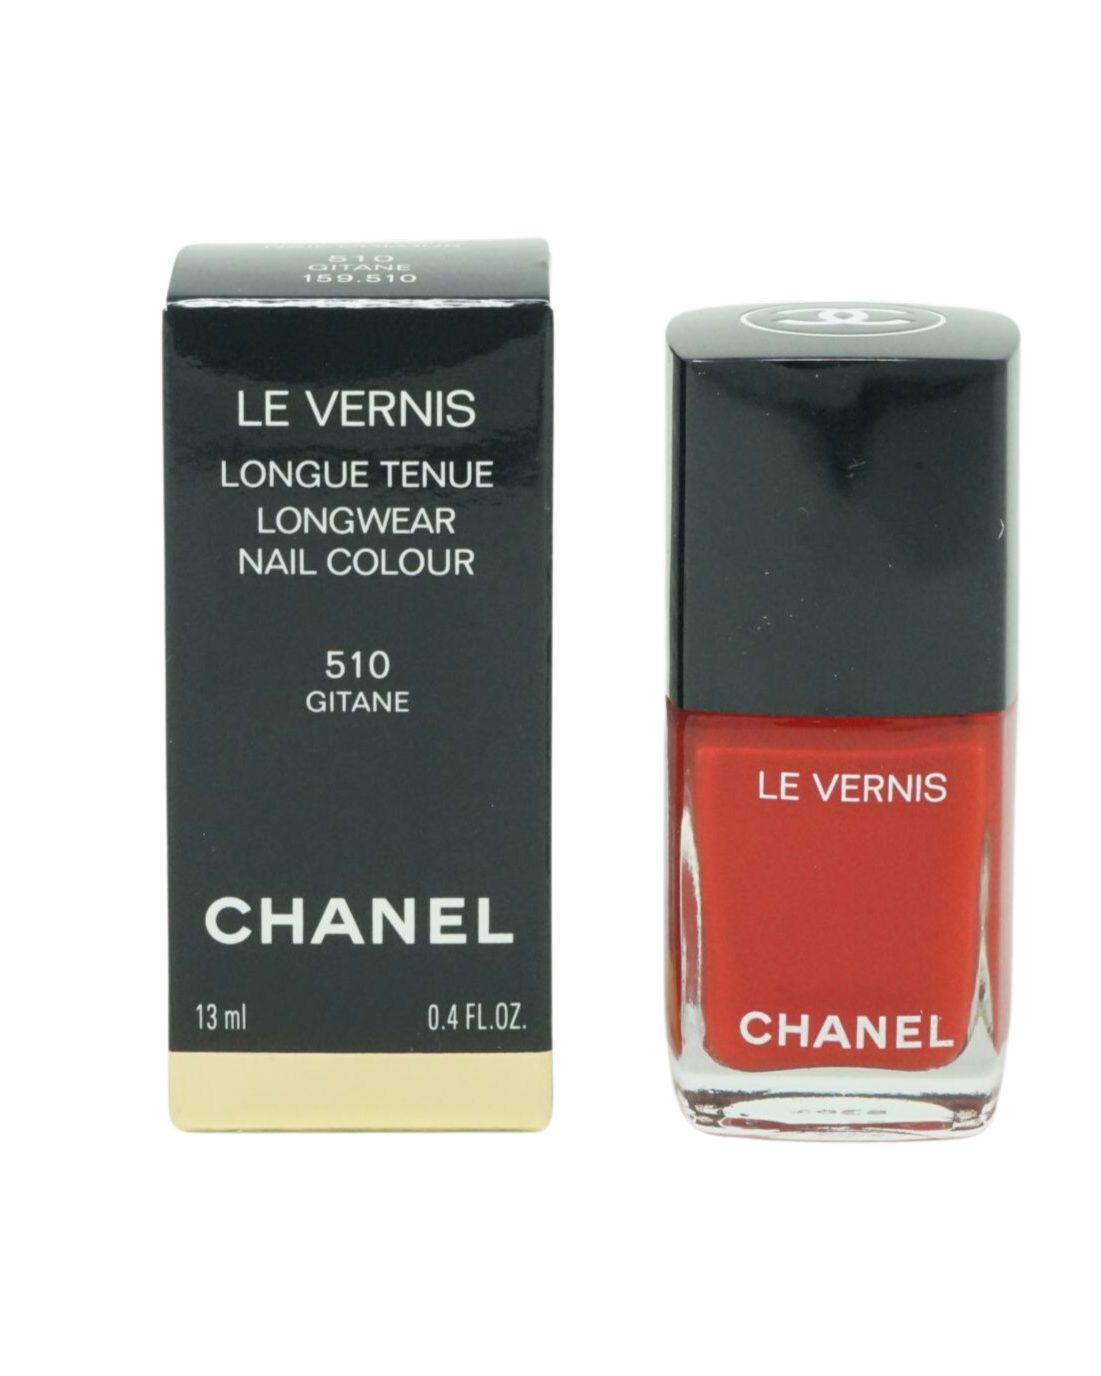 CHANEL Nagellack Chanel Le Vernis Longwear Nagellack 13ml 510 Gitane